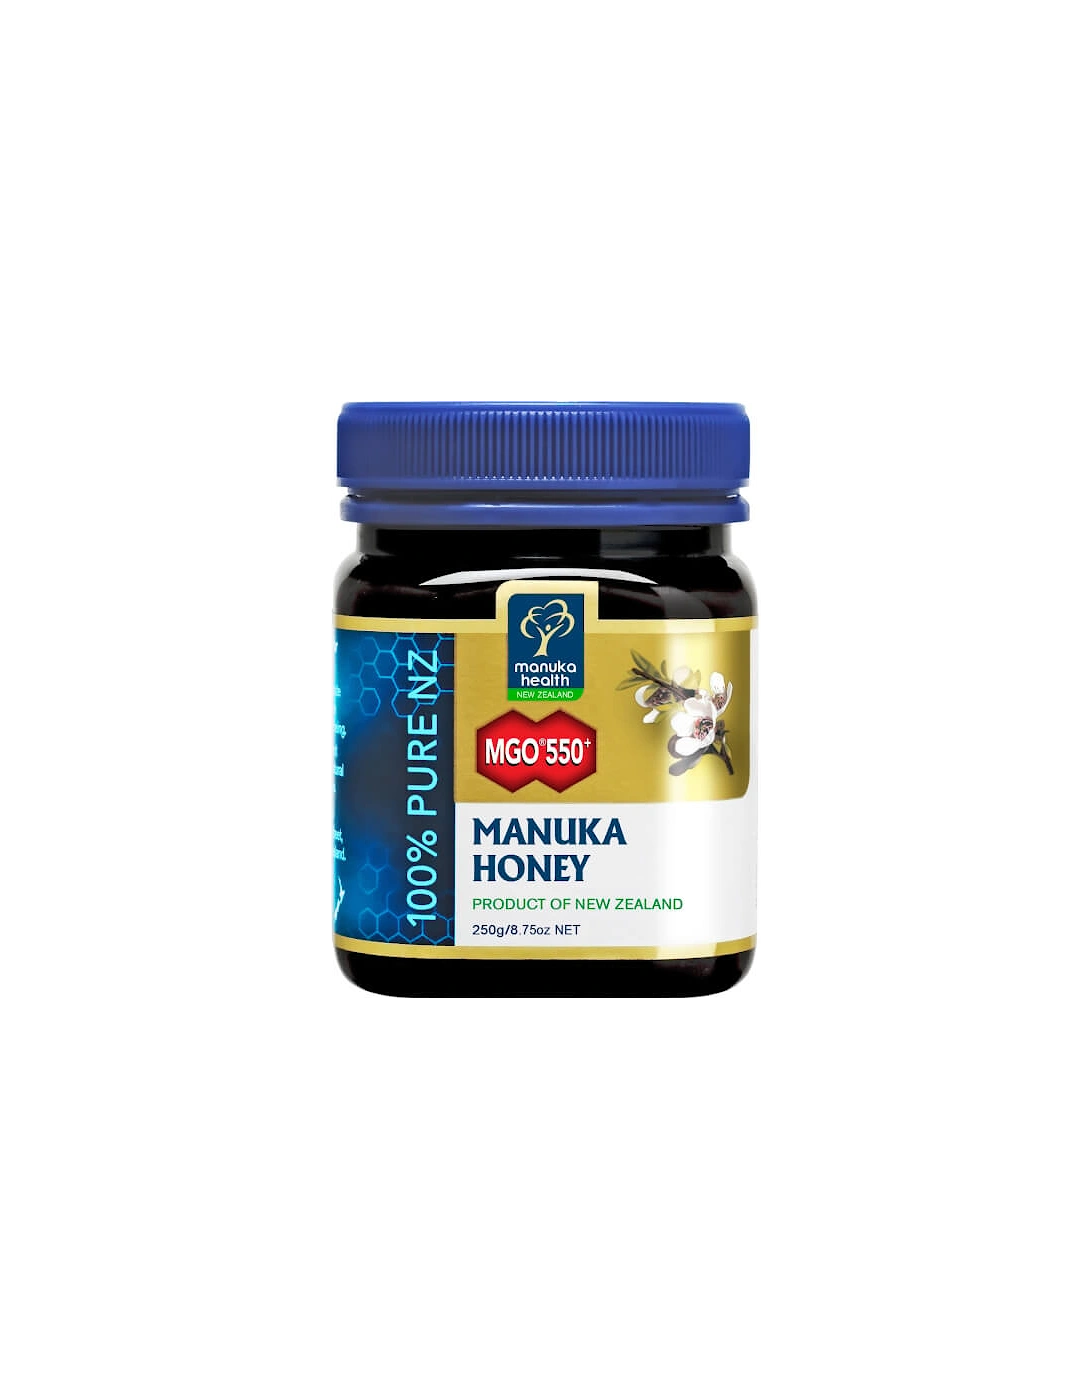 Health MGO 550+ Pure Monofloral Honey 250g - Health New Zealand Ltd - Health MGO 550+ Pure Monofloral Honey 250g - Health MGO 550+ Pure Monofloral Honey 500g, 2 of 1